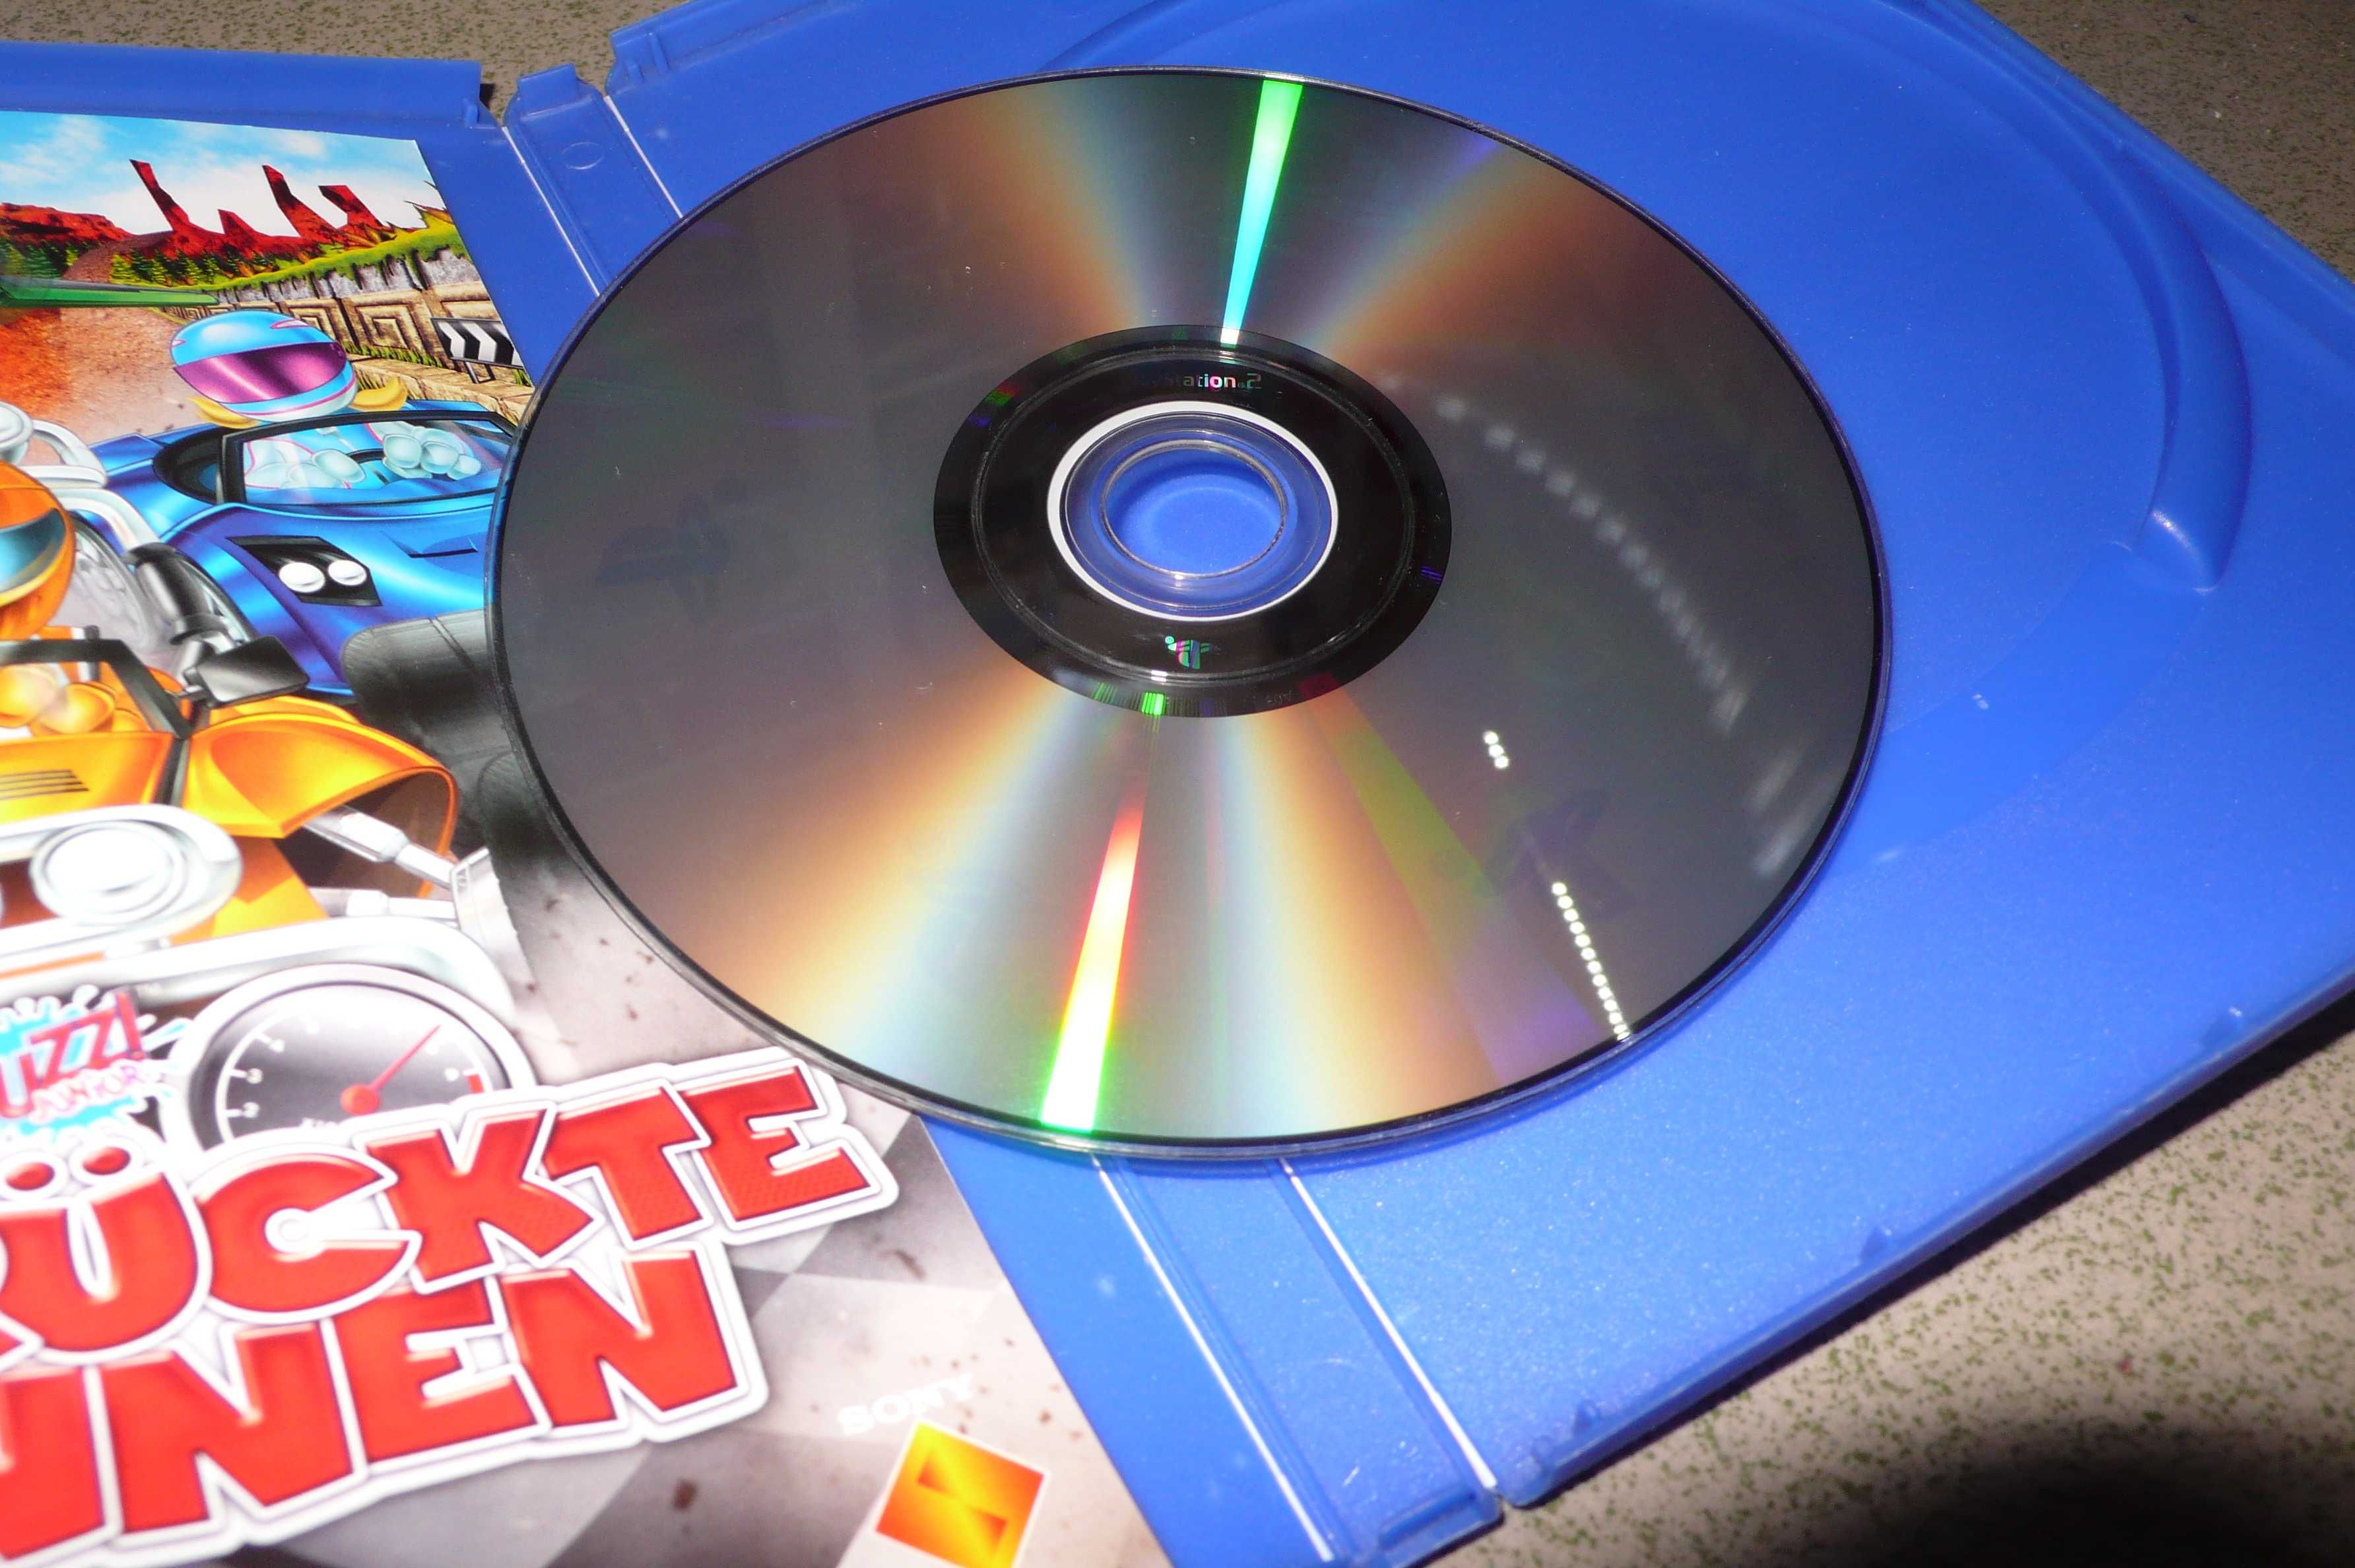 Buzz Ace Racers  PS2 Playstation 2 gra na buzz buzzery